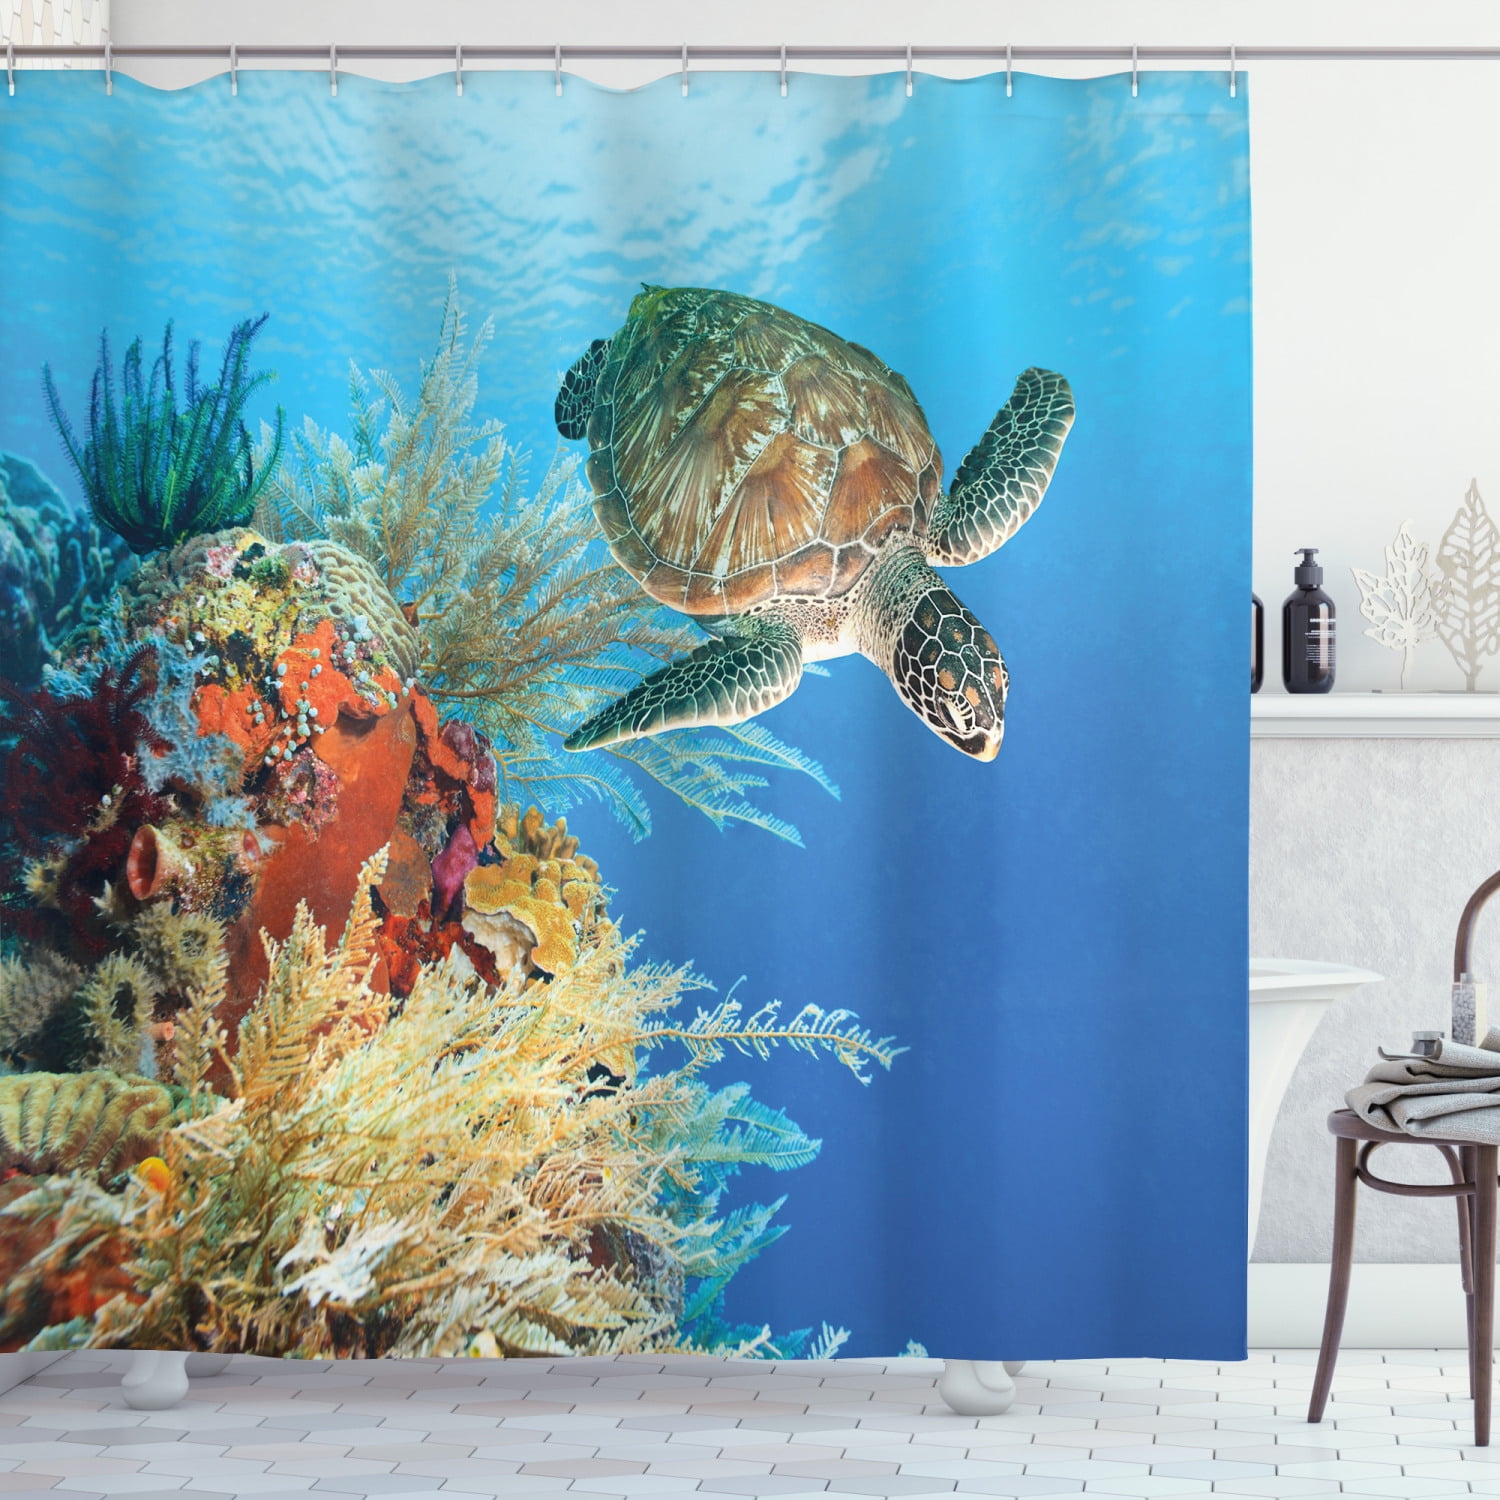 Waterproof Fabric Shower Curtain Big Sea Turtle Palm Island Bath Accessory Sets 